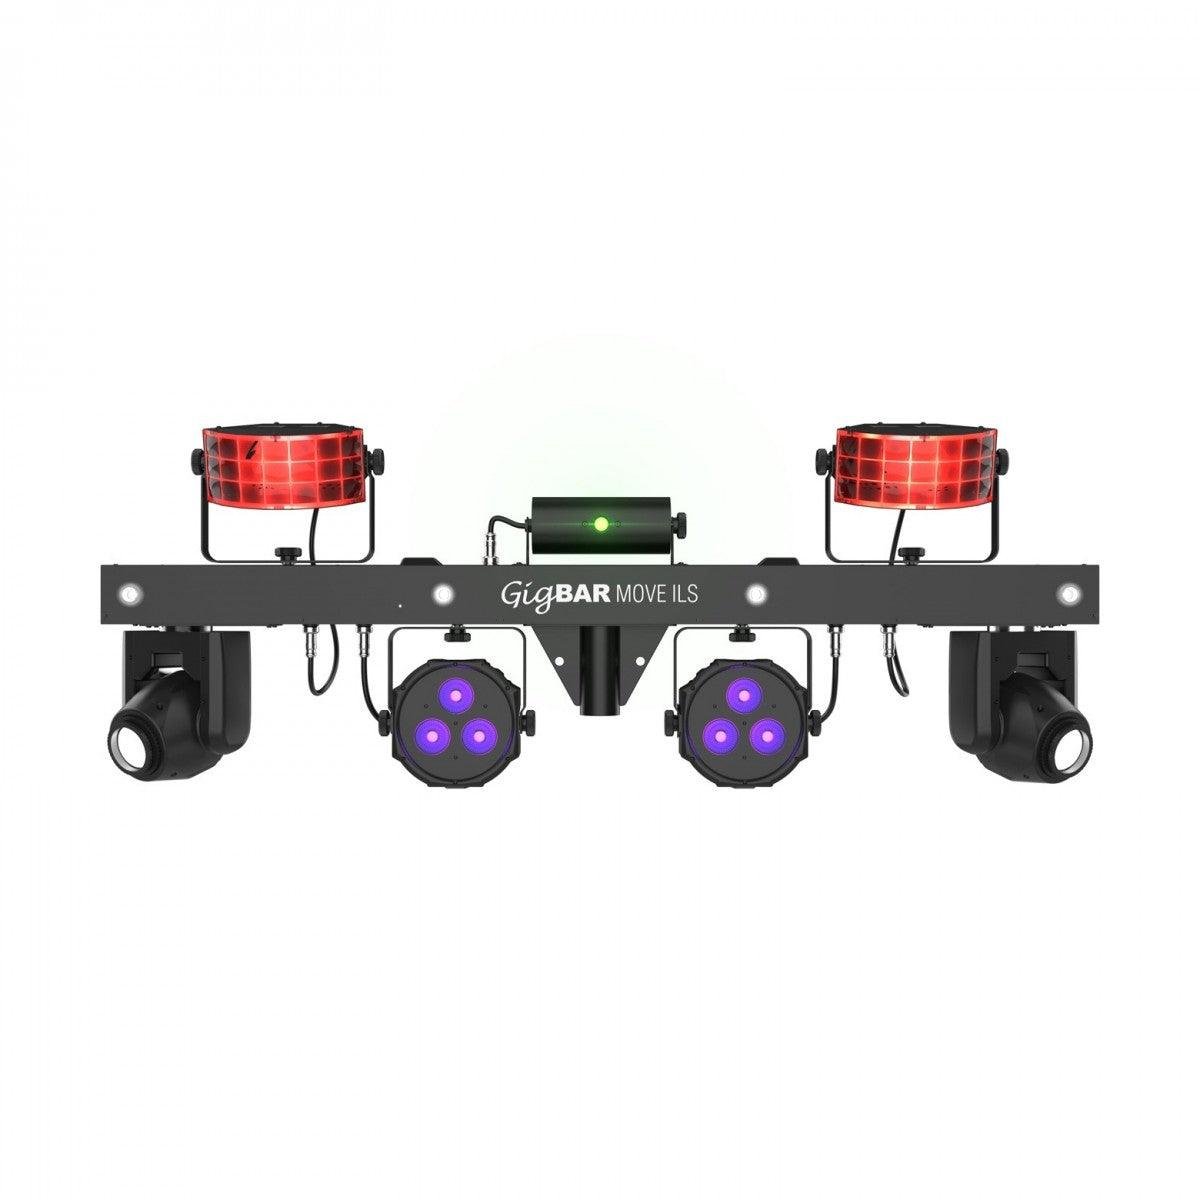 Chauvet GigBAR Move ILS 5-in-1 Lighting System - DY Pro Audio